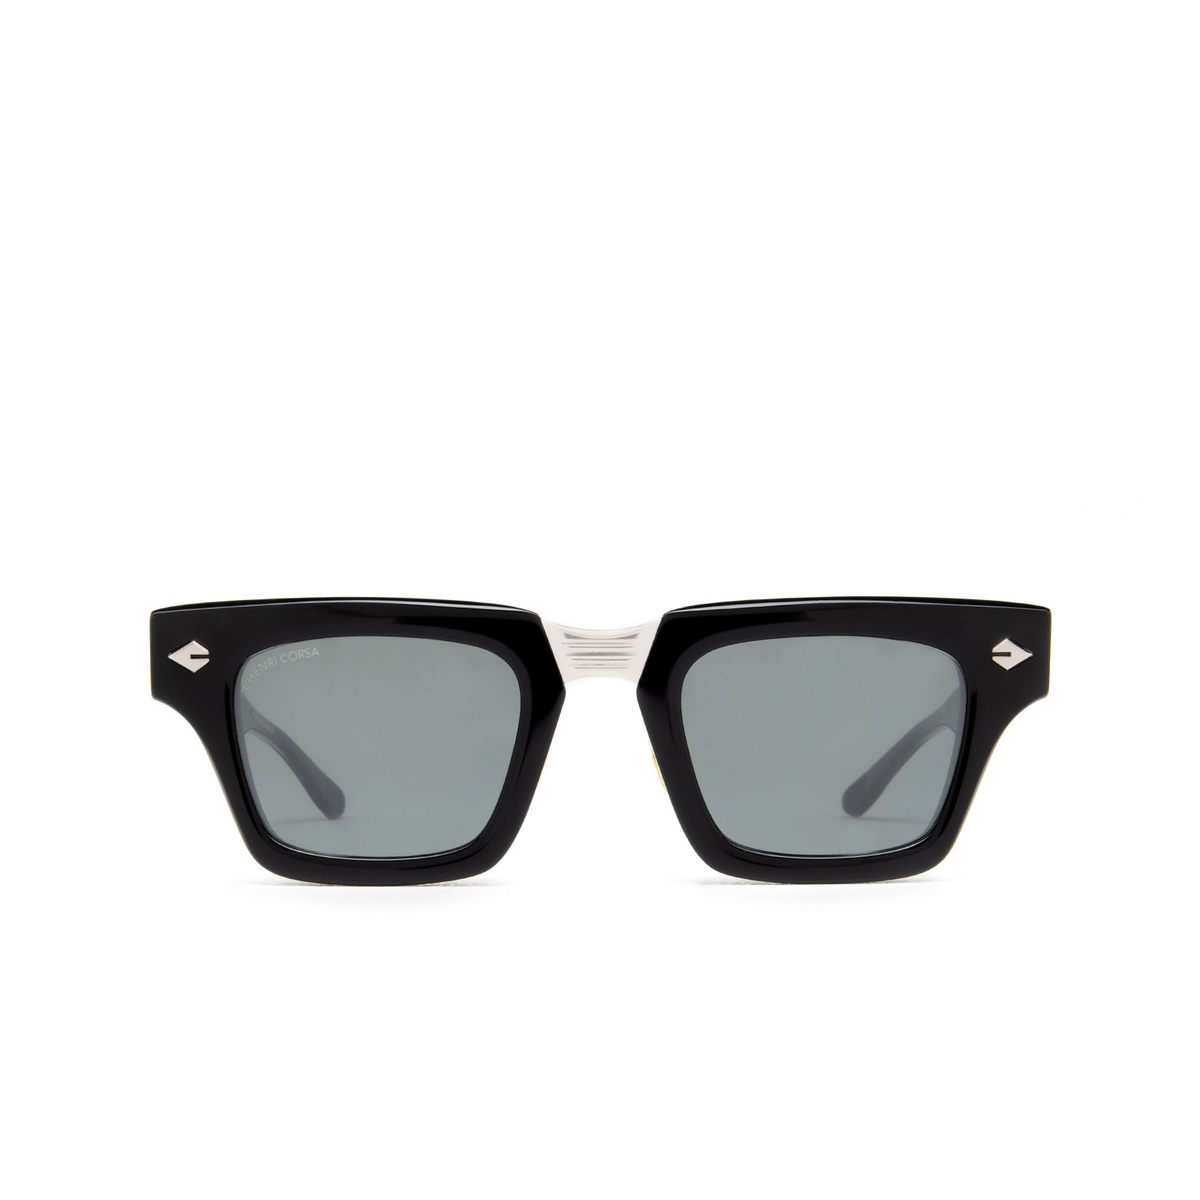 T Henri CORSA Sunglasses SHADOW - front view